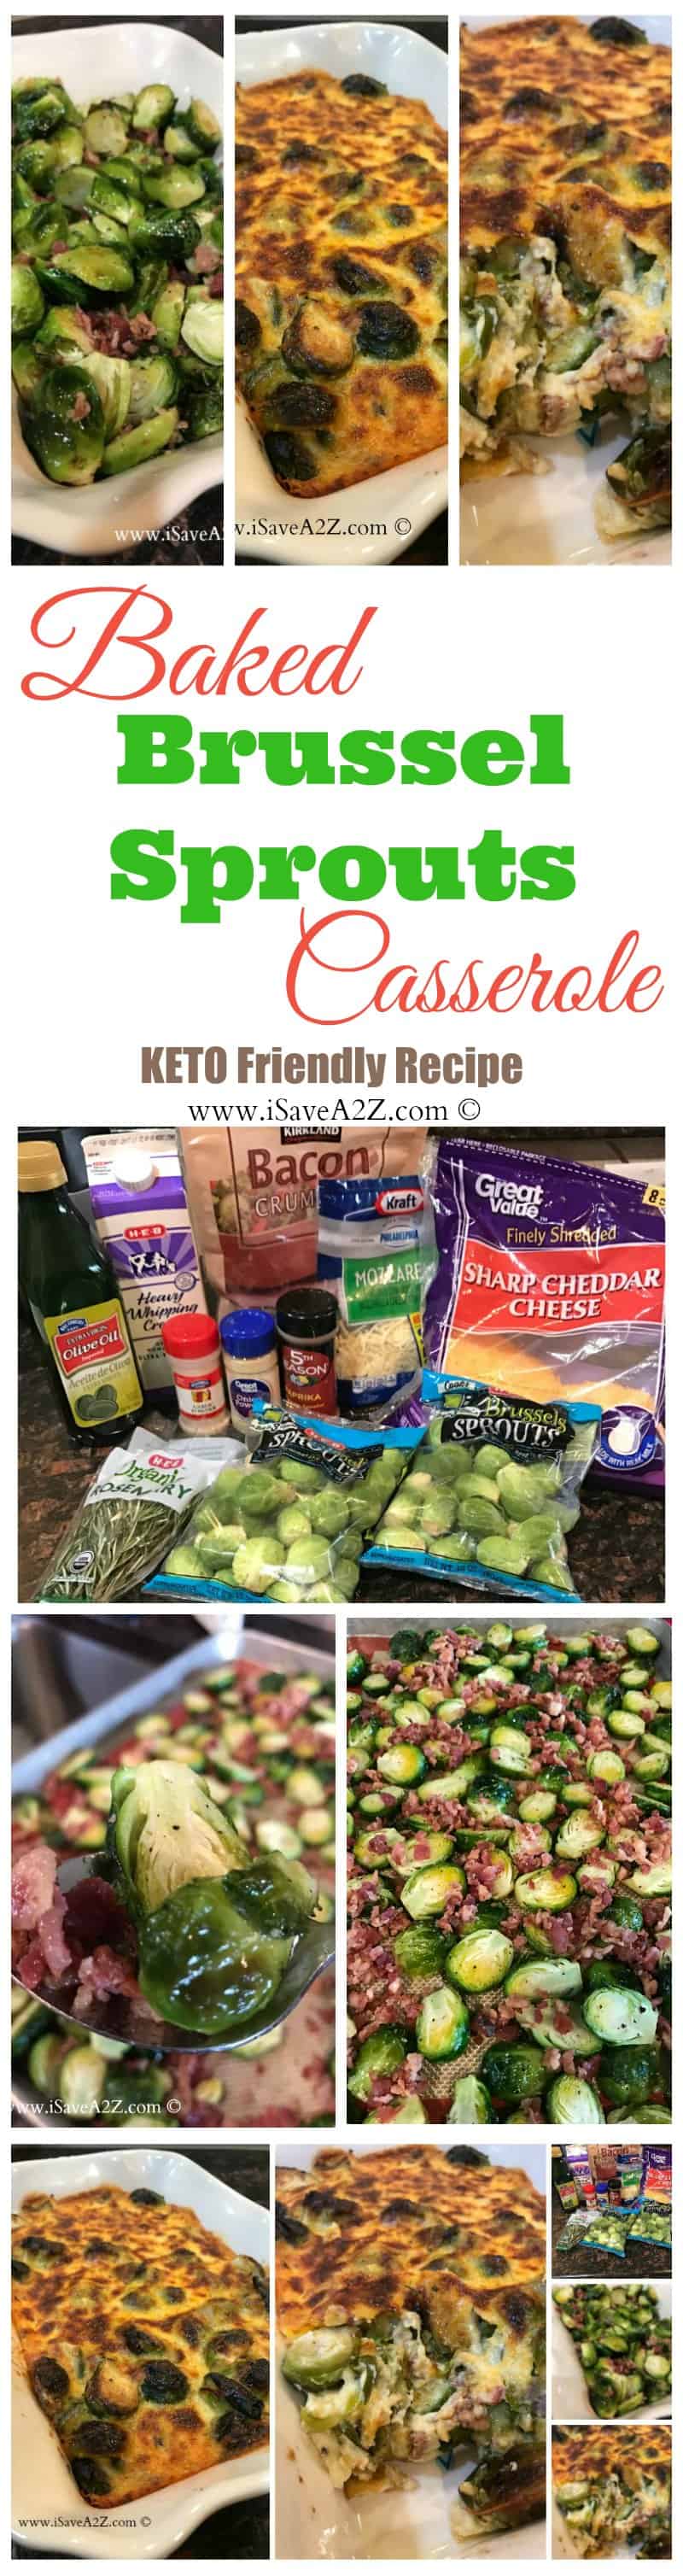 Baked Brussel Sprouts Casserole (Keto Friendly Recipe)